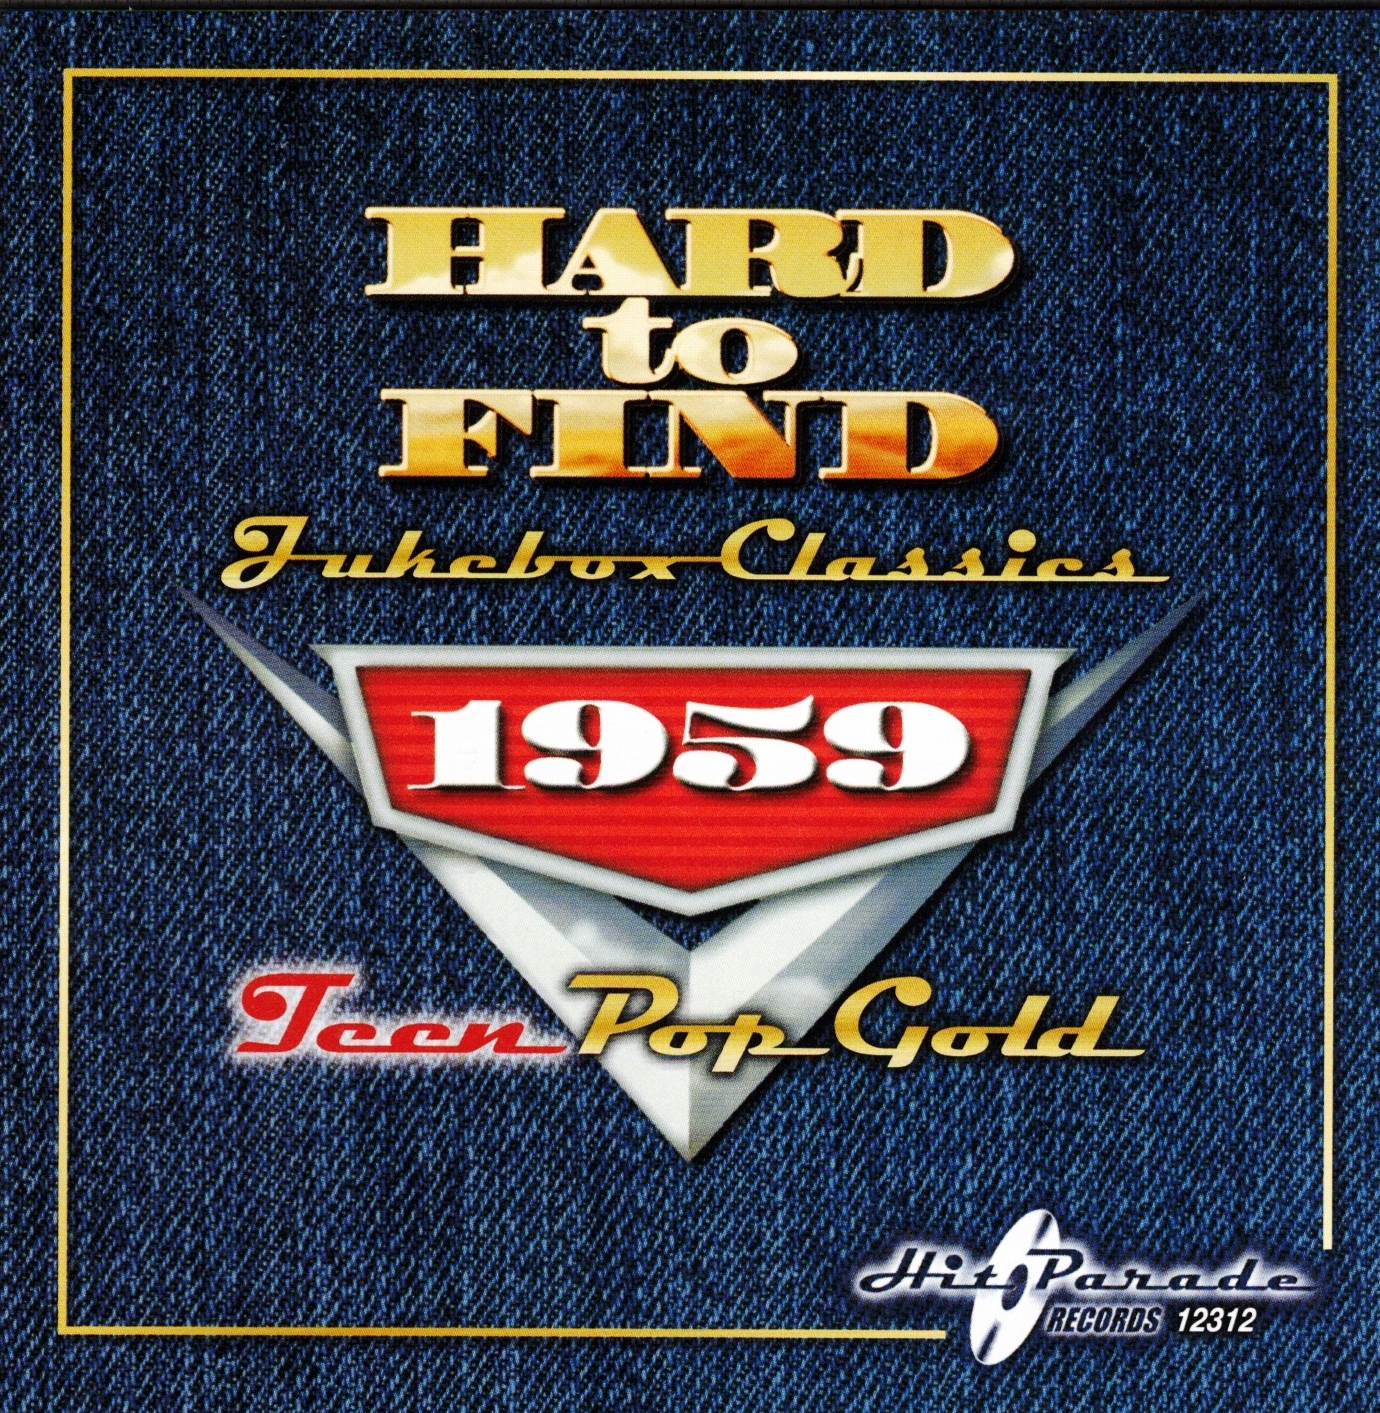 Hard To Find Jukebox Classics 1959: Teen Pop Gold